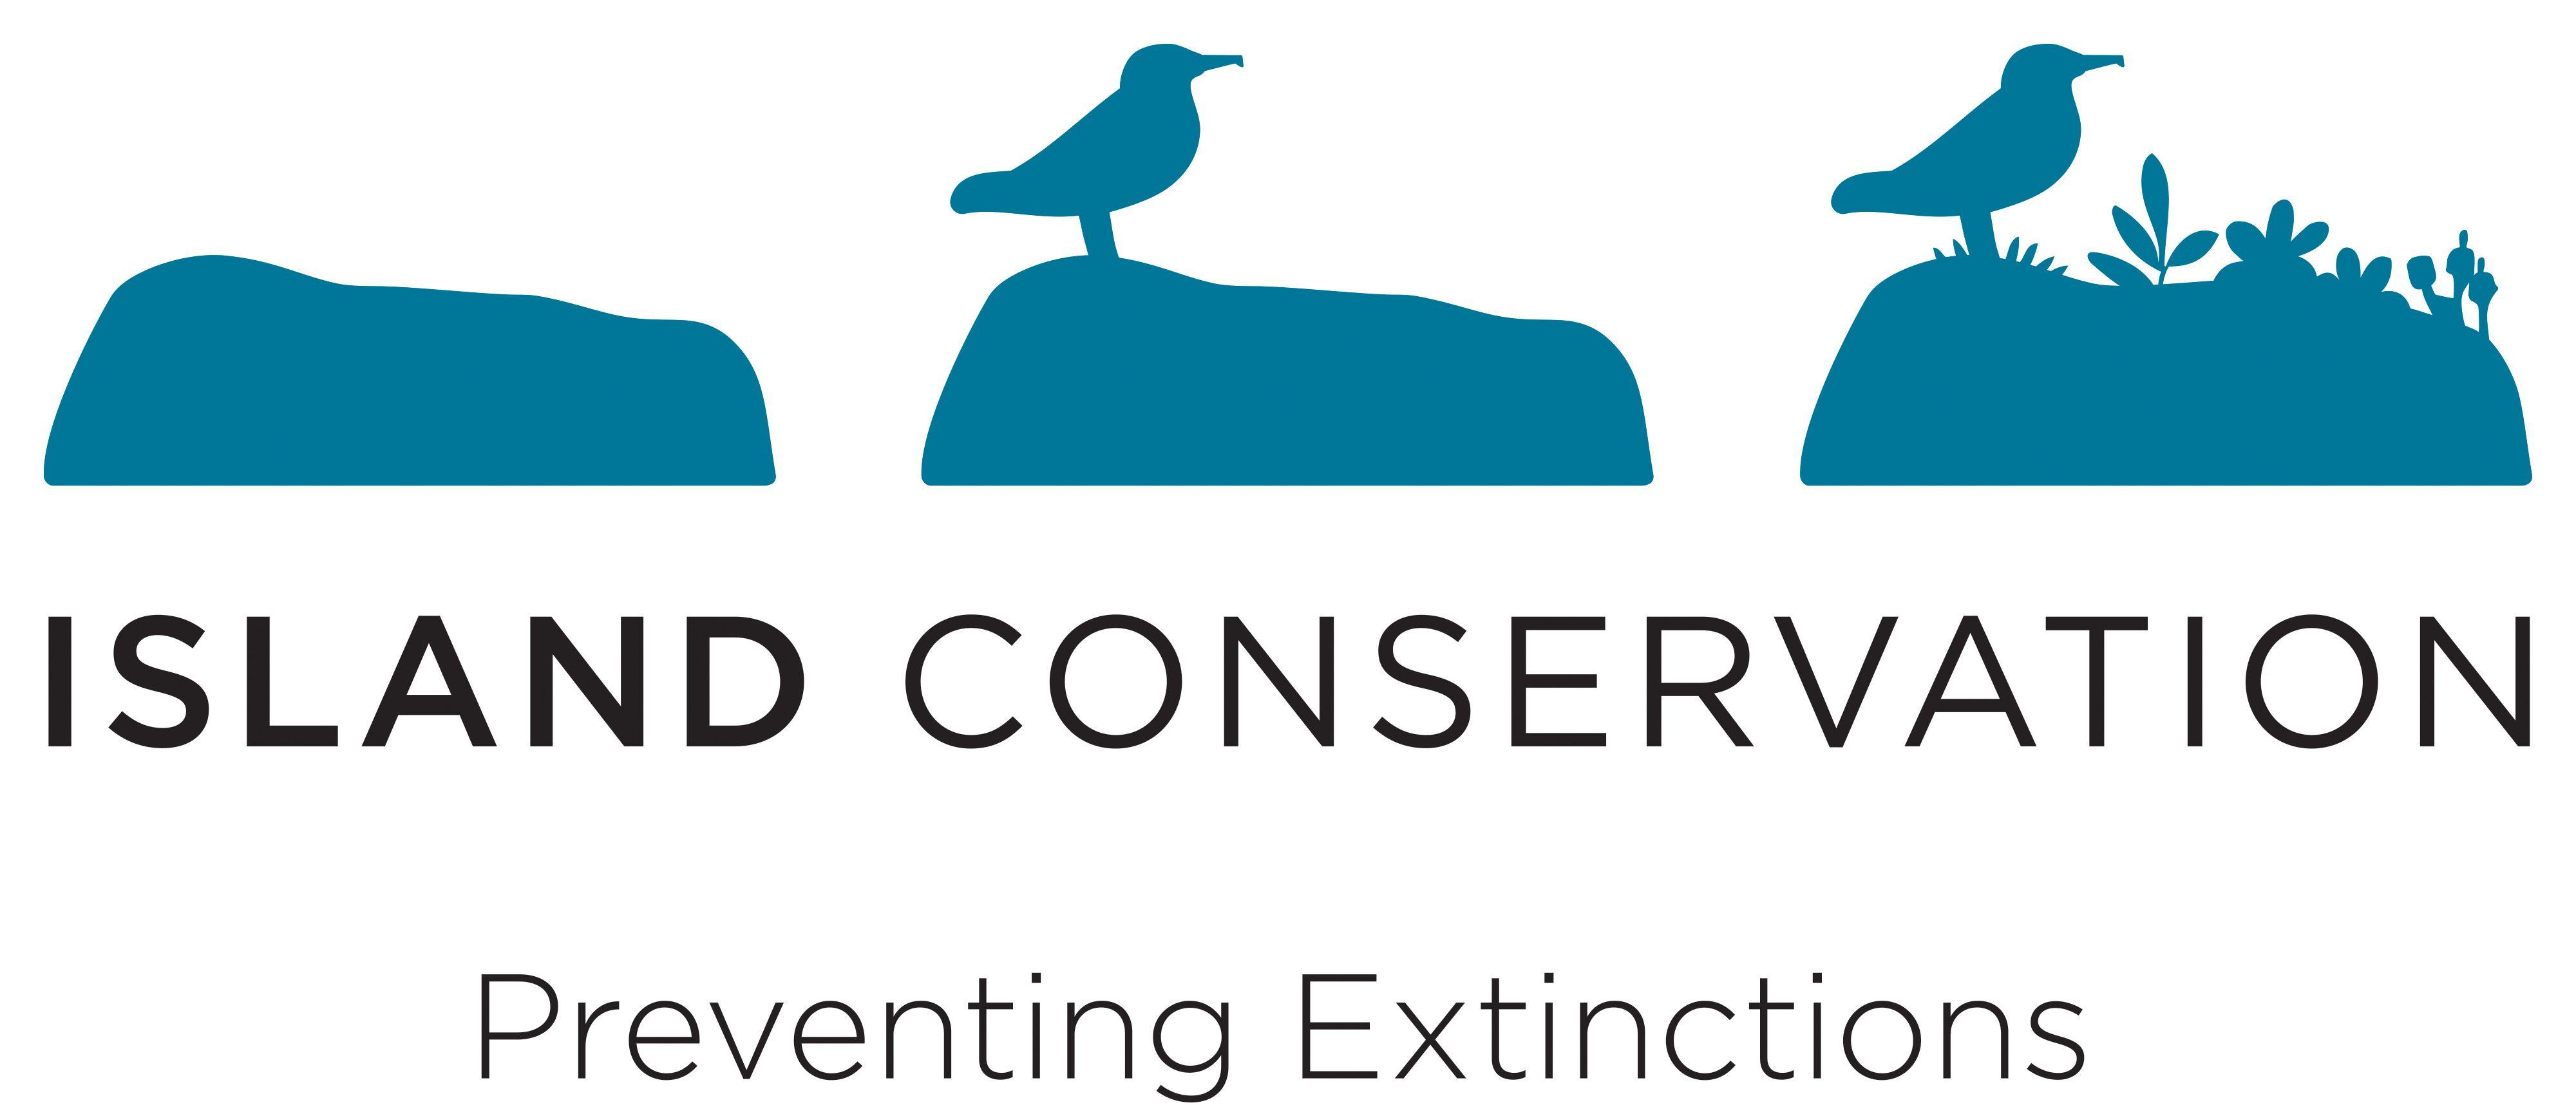 Conservation Logo - Island Conservation Brand - Island Conservation